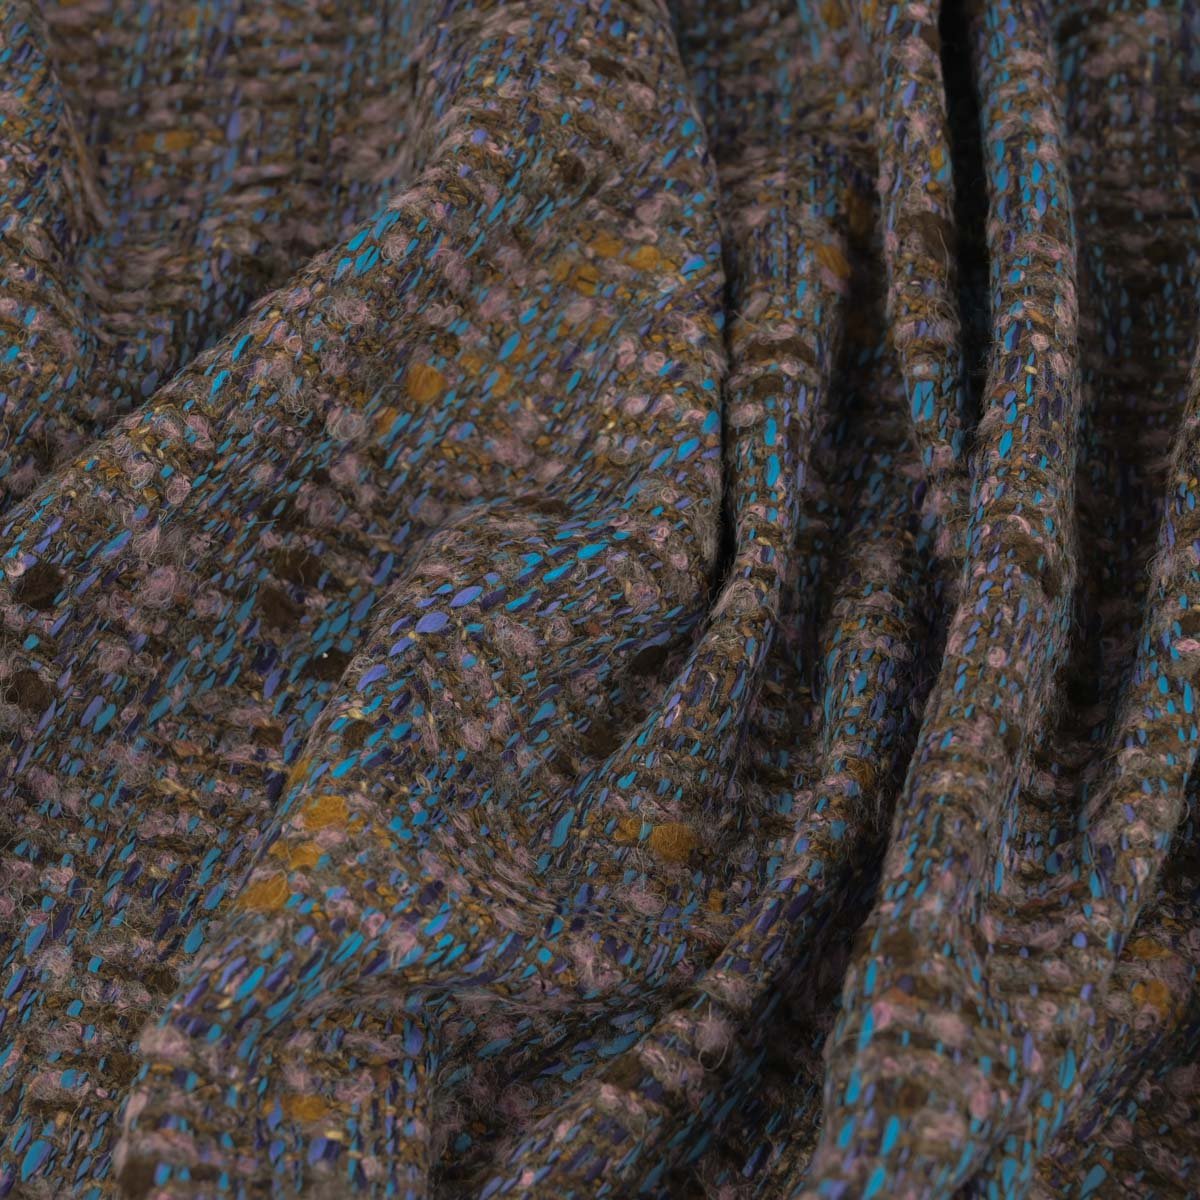 Multicoloured Coating Fabric 96488